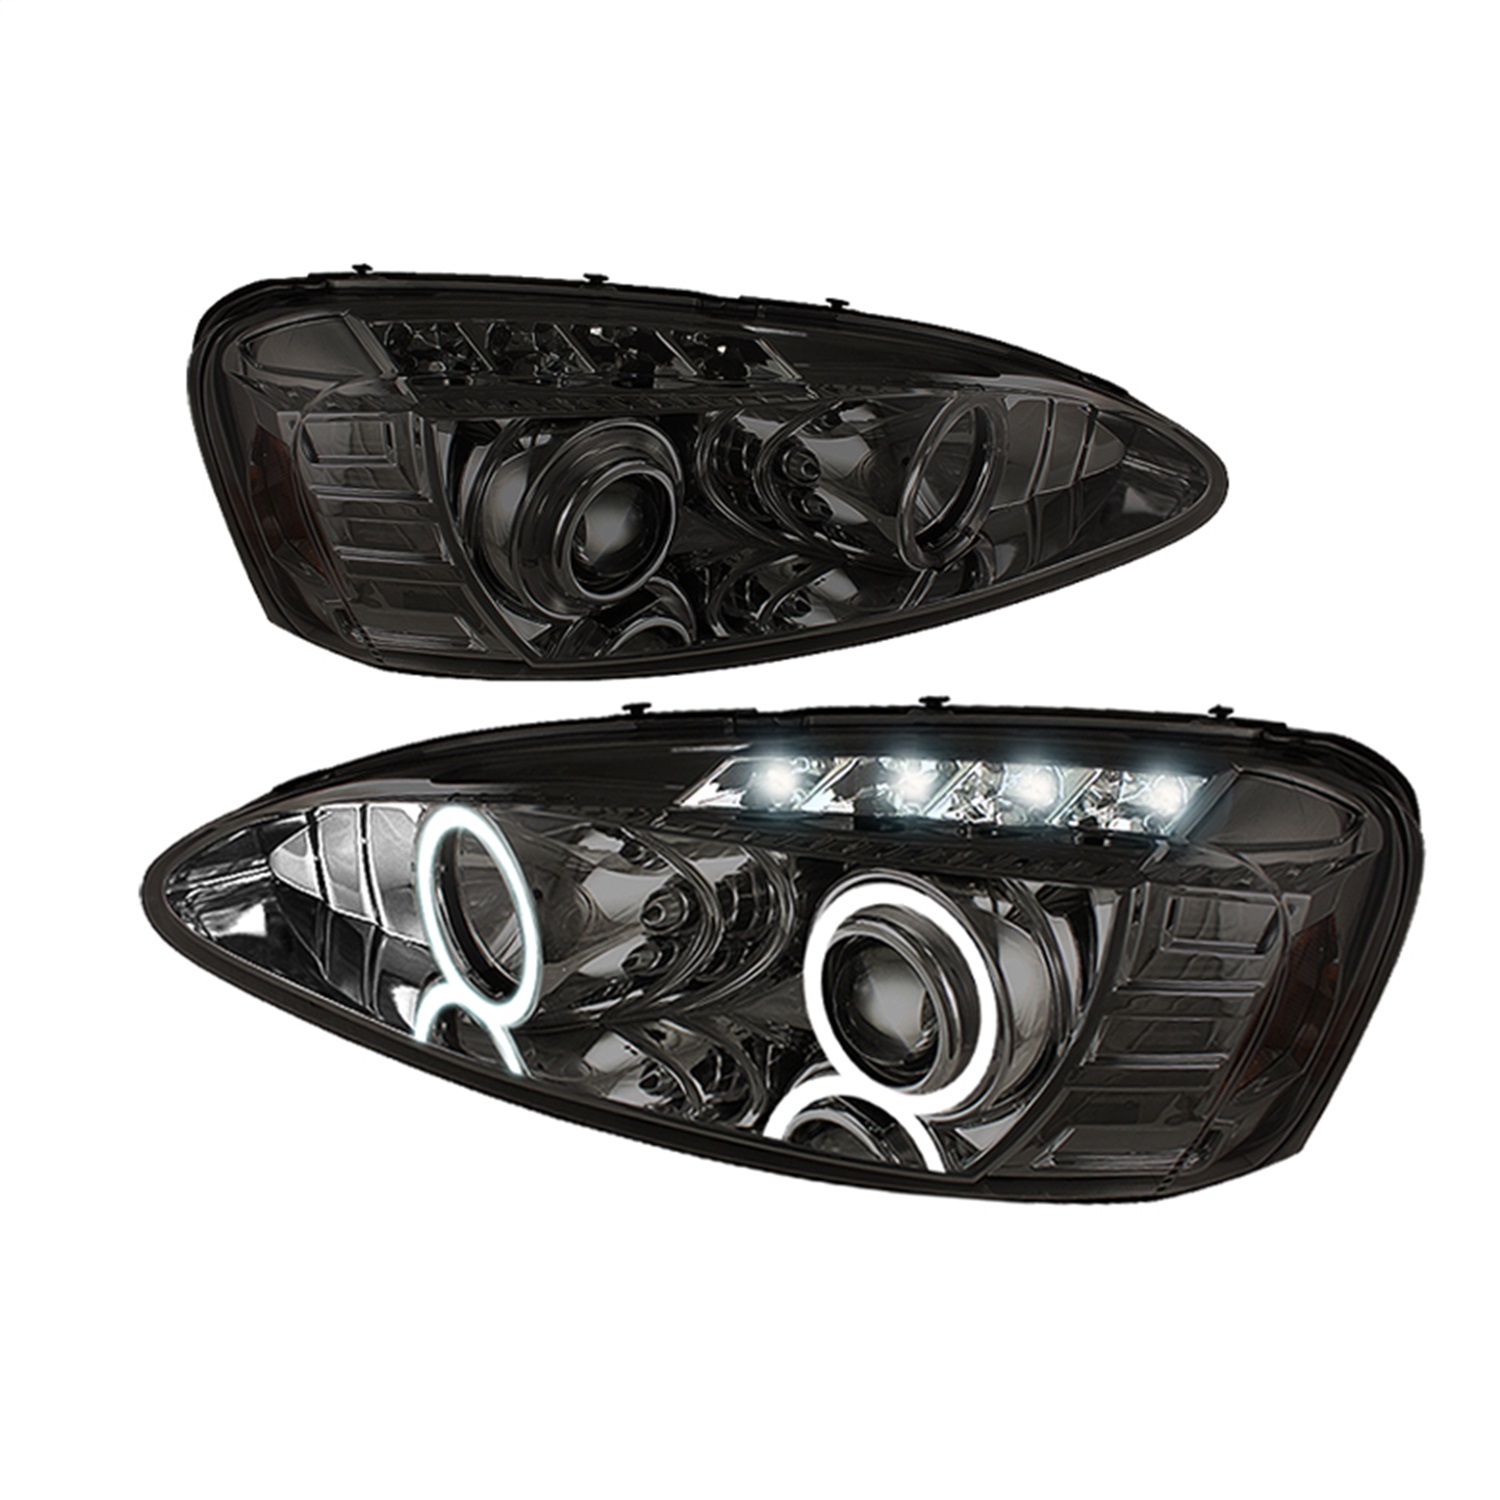 Spyder Auto 5011688 Halo LED Projector Headlights Fits 04-08 Grand Prix